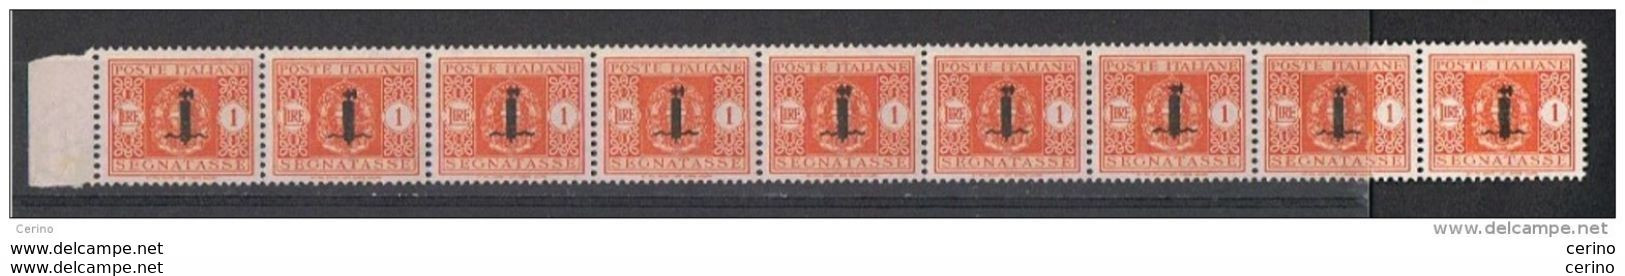 R.S.I.:  1944  TASSE  SOPRASTAMPATI  -  £. 1  ARANCIO  STRISCIA  9  N. -  SASS. 68 - Postage Due